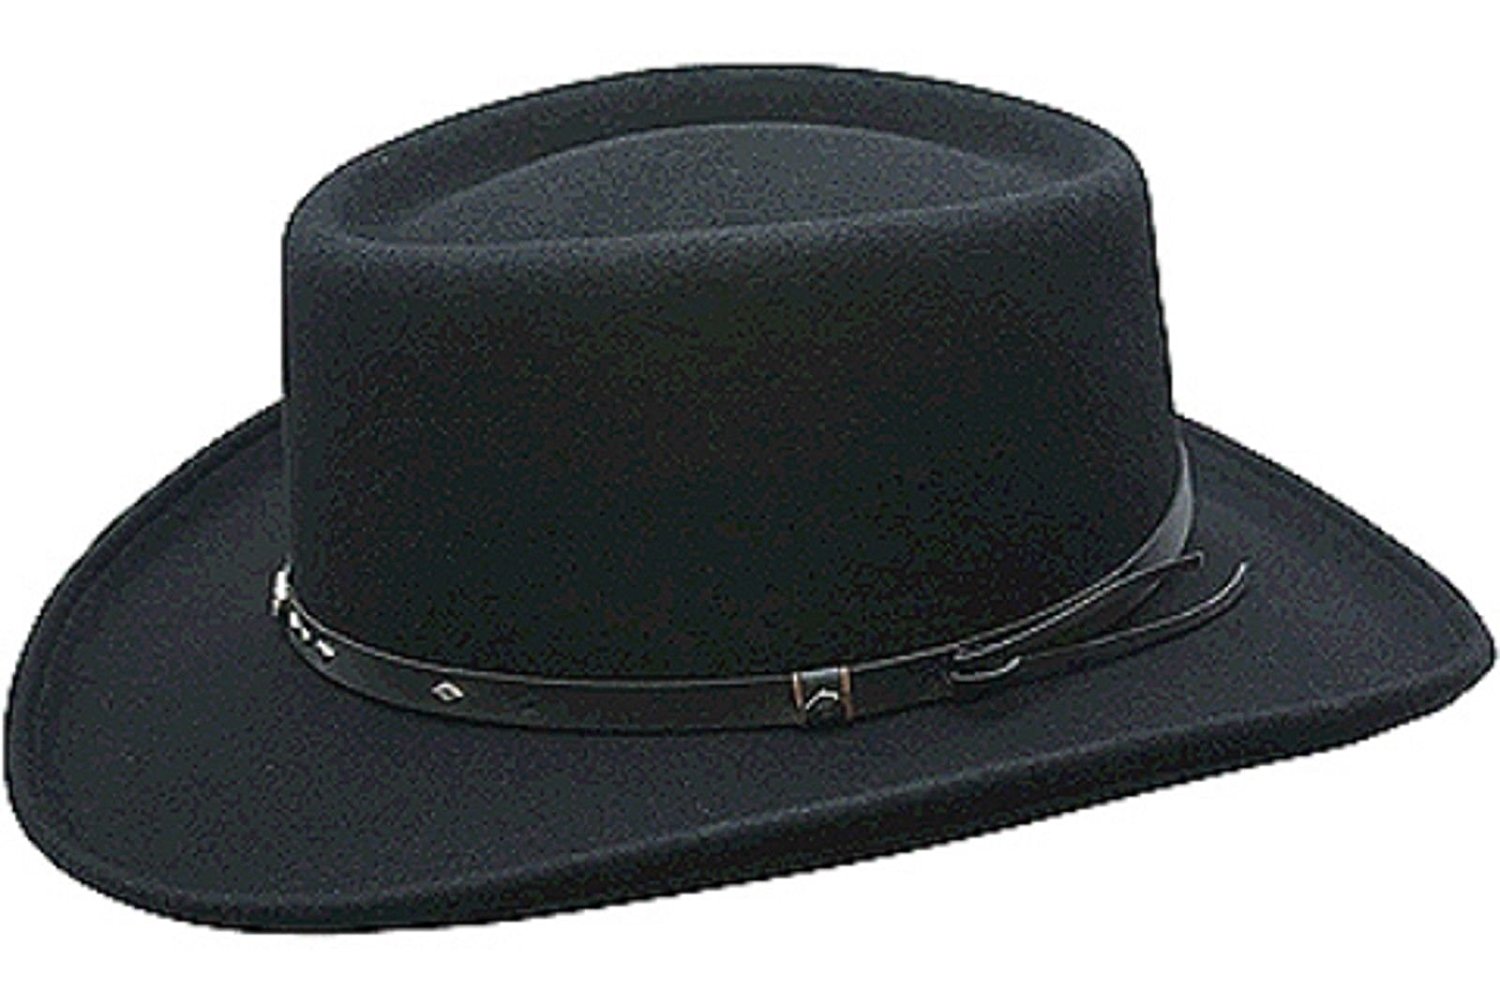 black flat brim gambler hat